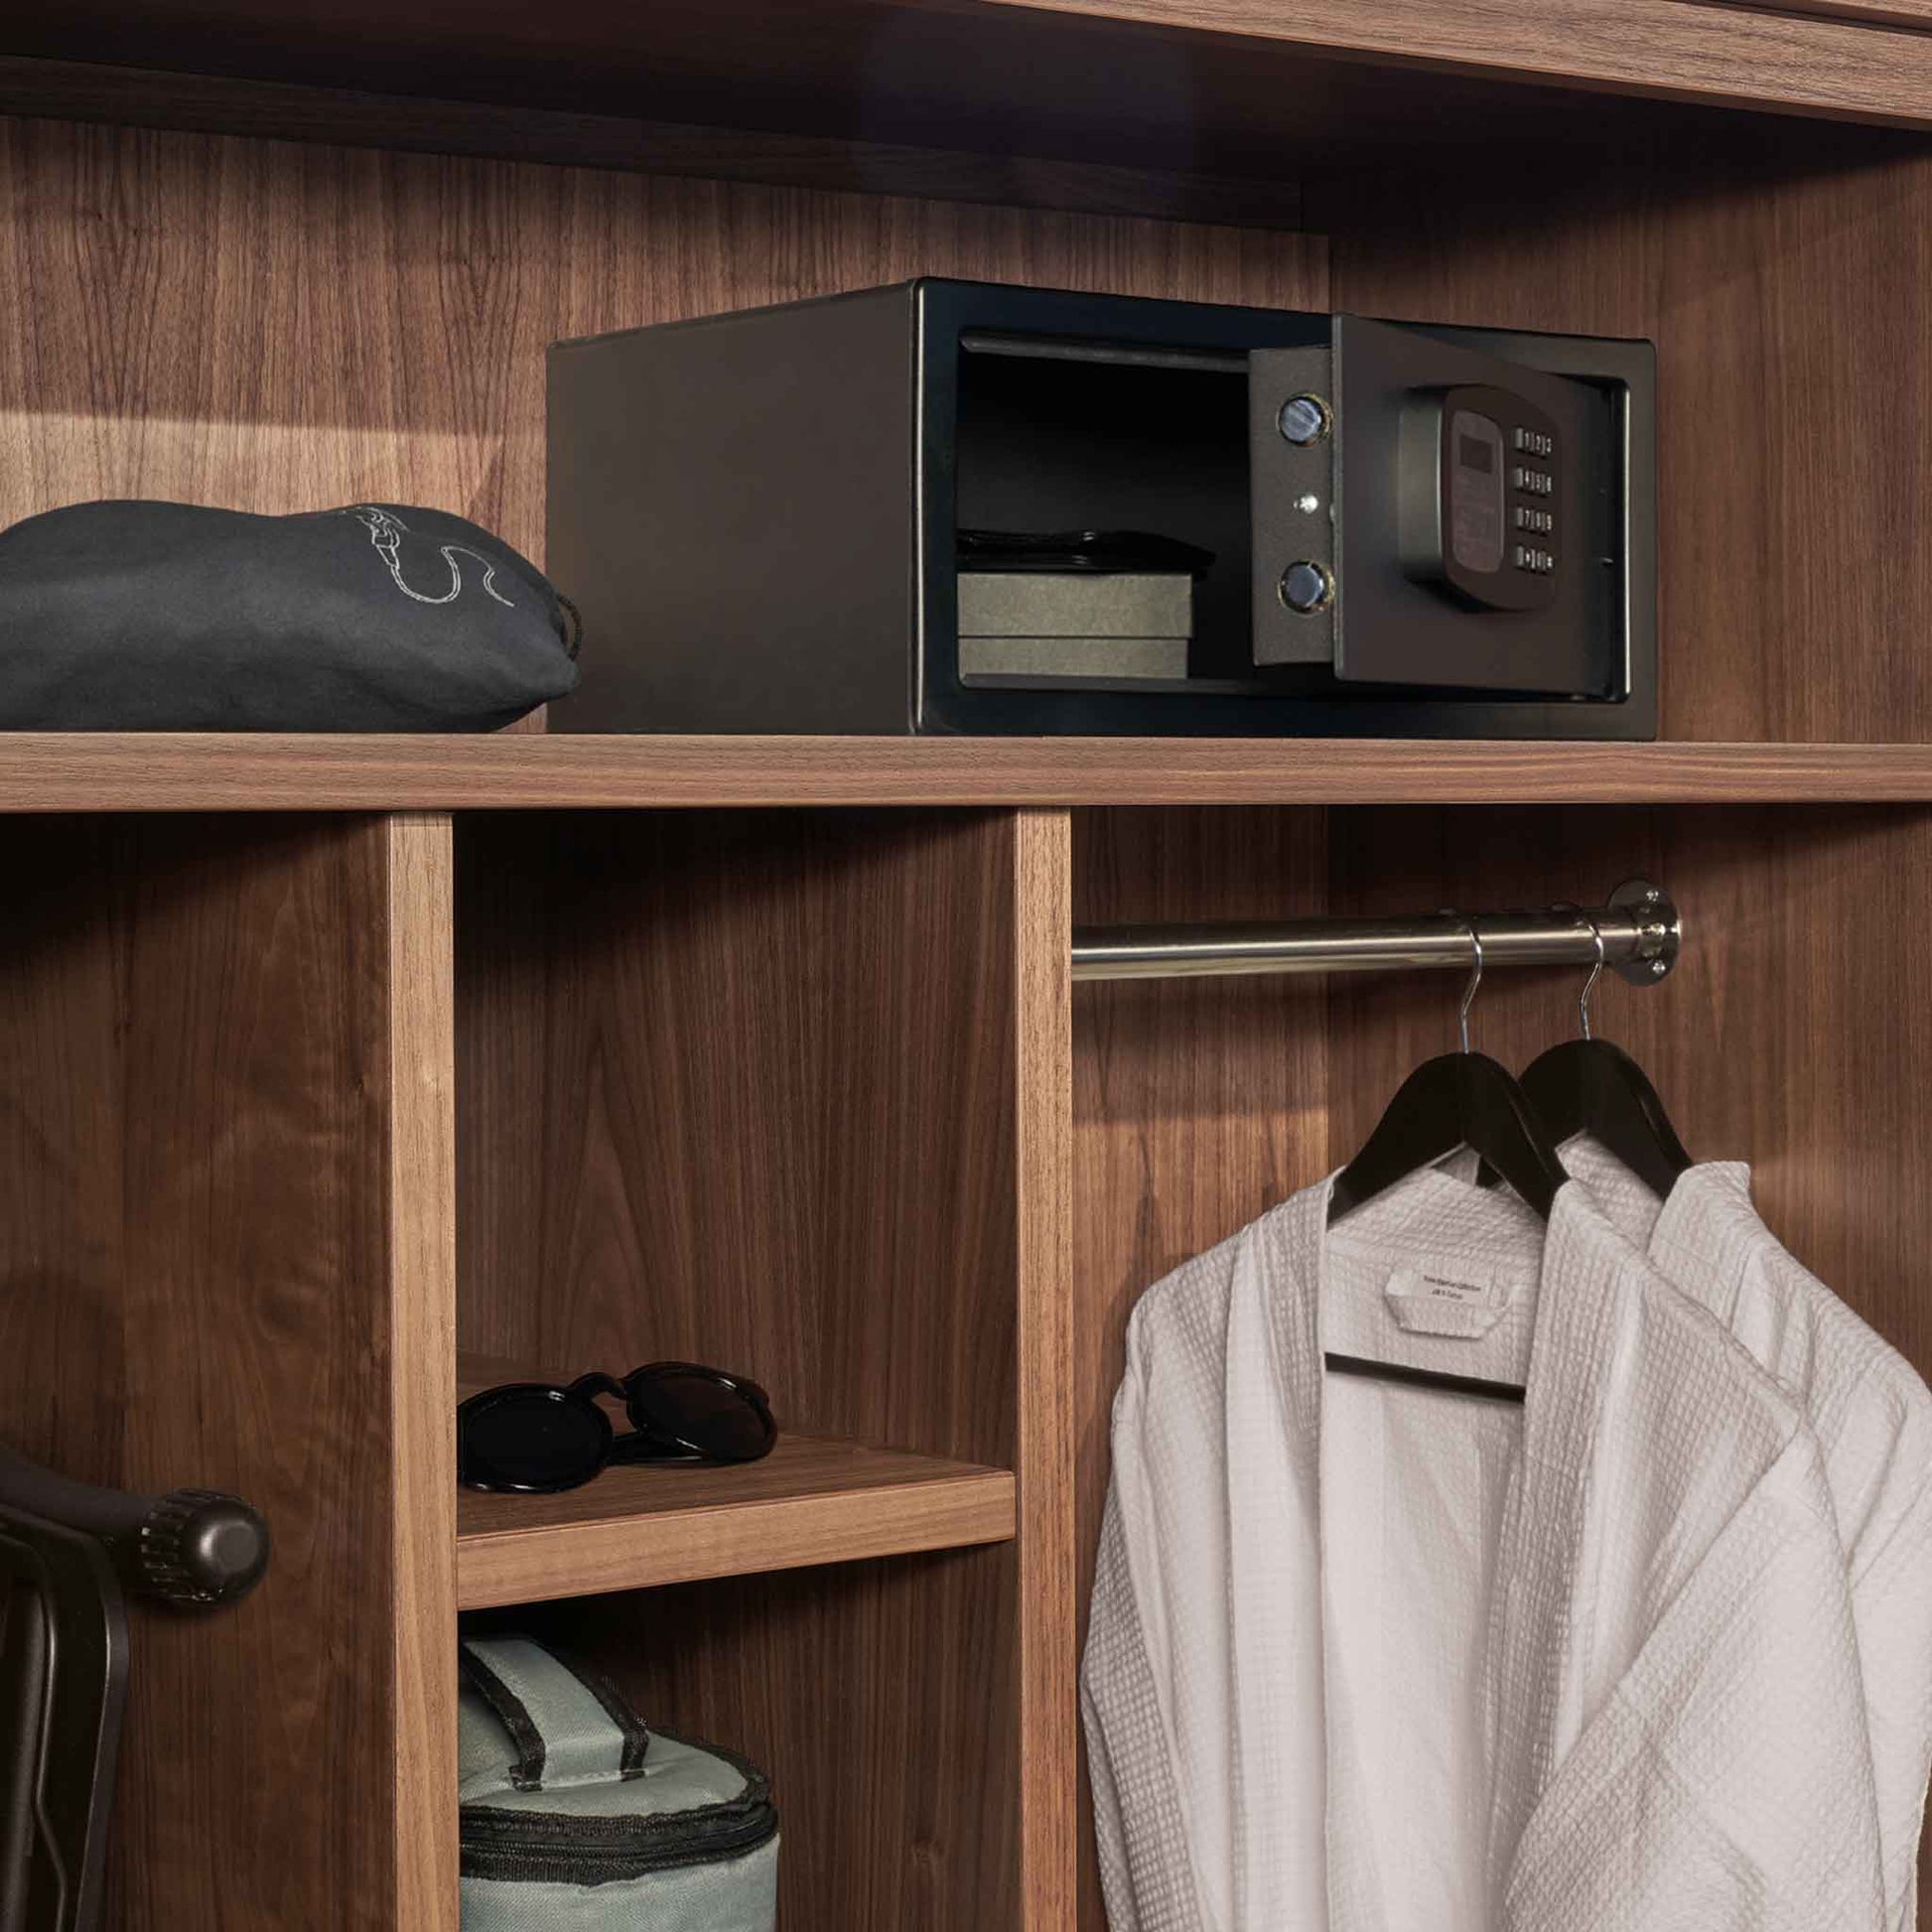 Whitehall digital compact safe in hotel wardrobe